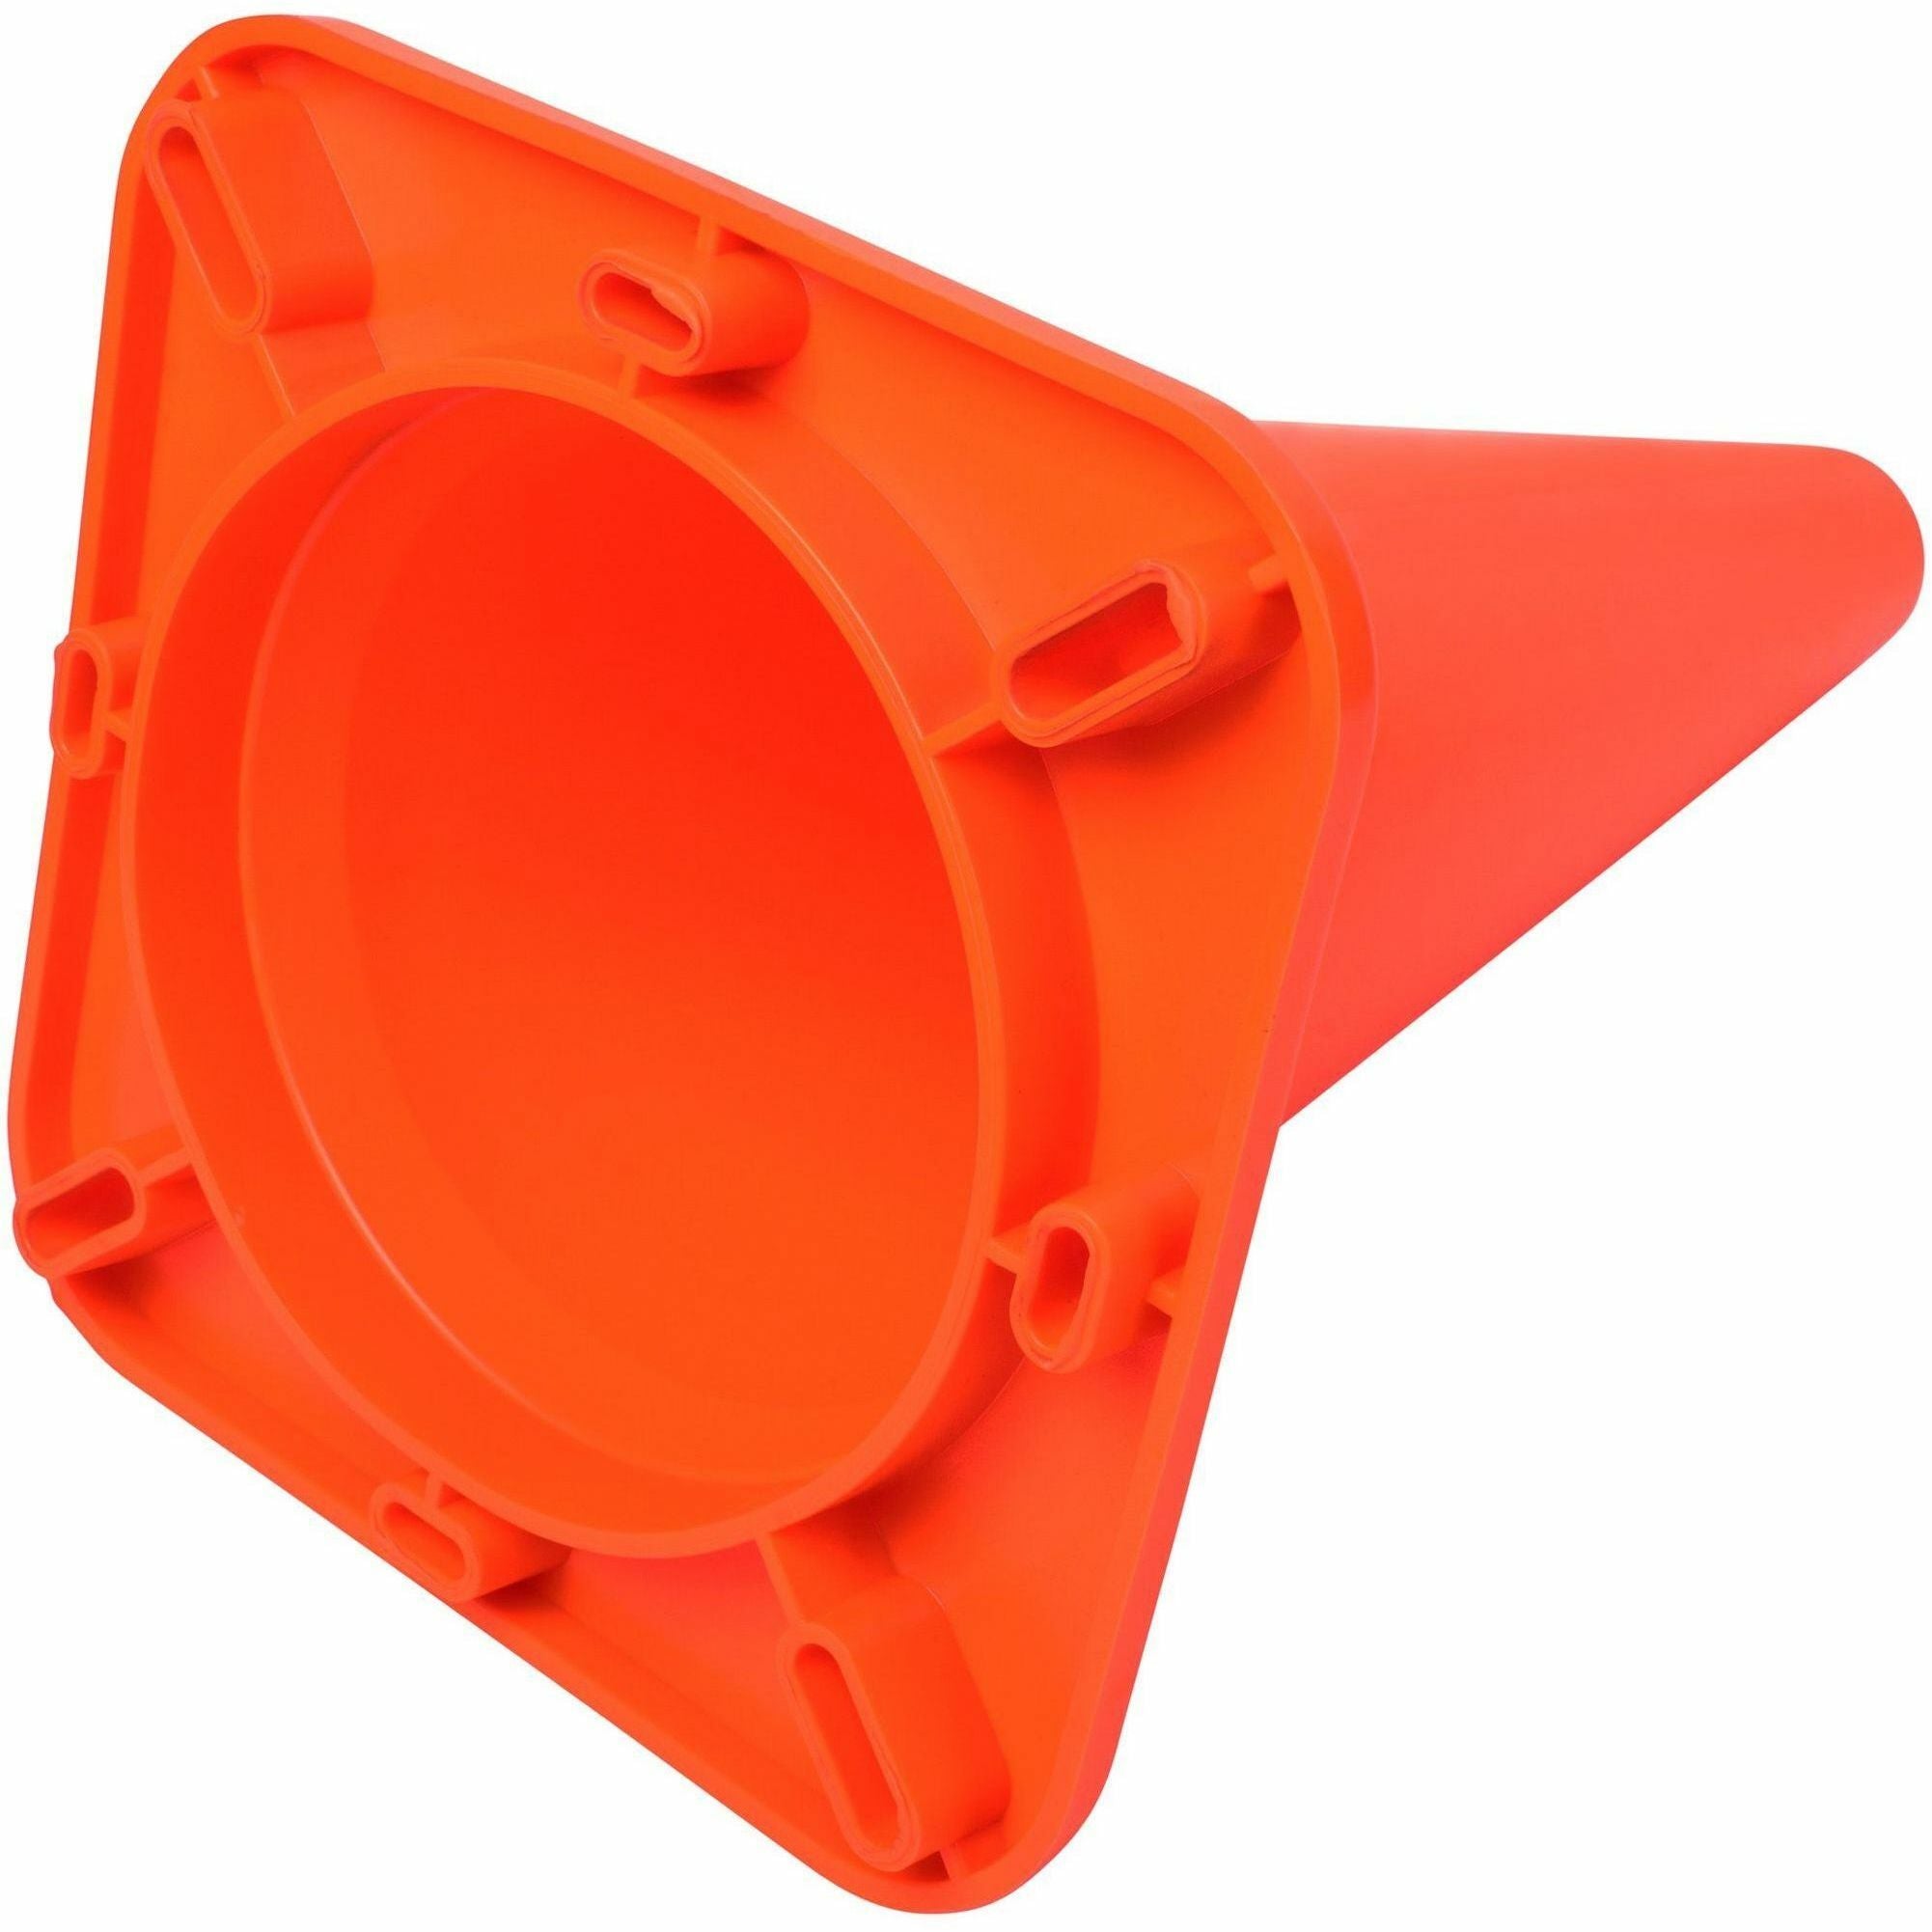 tatco-18-traffic-cone-1-each-sturdy-polyvinyl-chloride-pvc-orange_tco25300 - 2